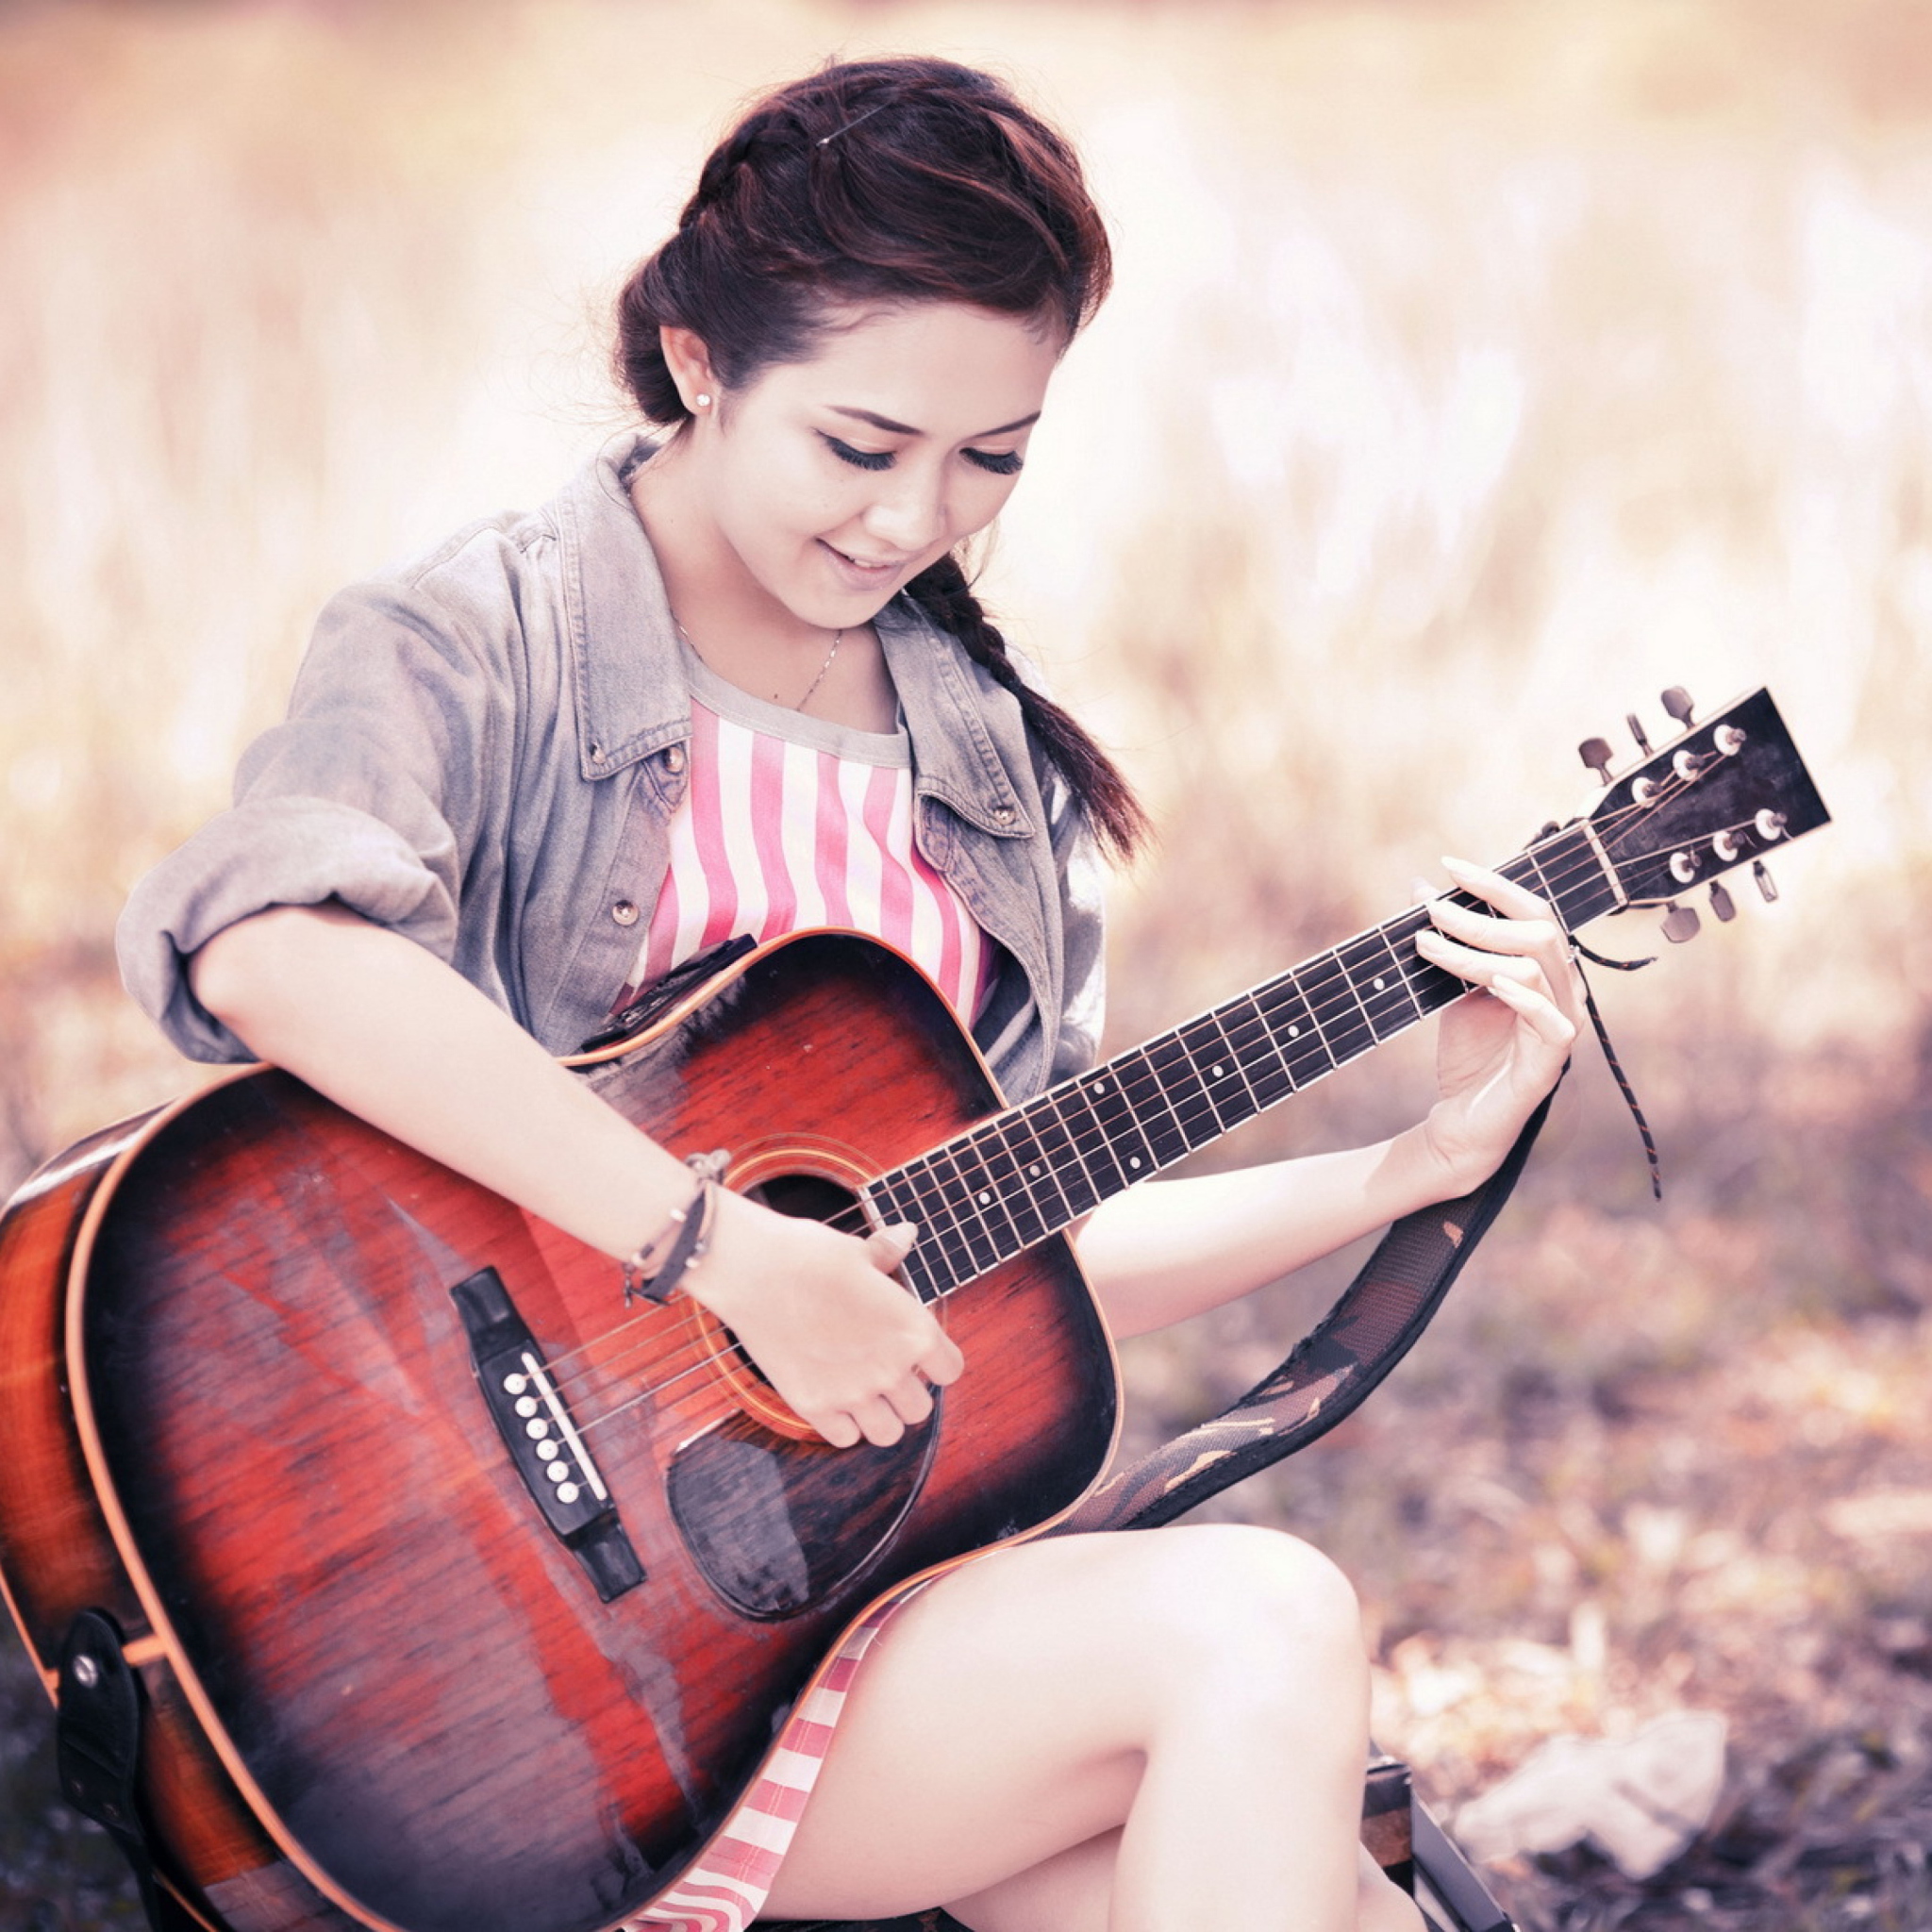 Asian Girl With Guitar wallpaper 2048x2048